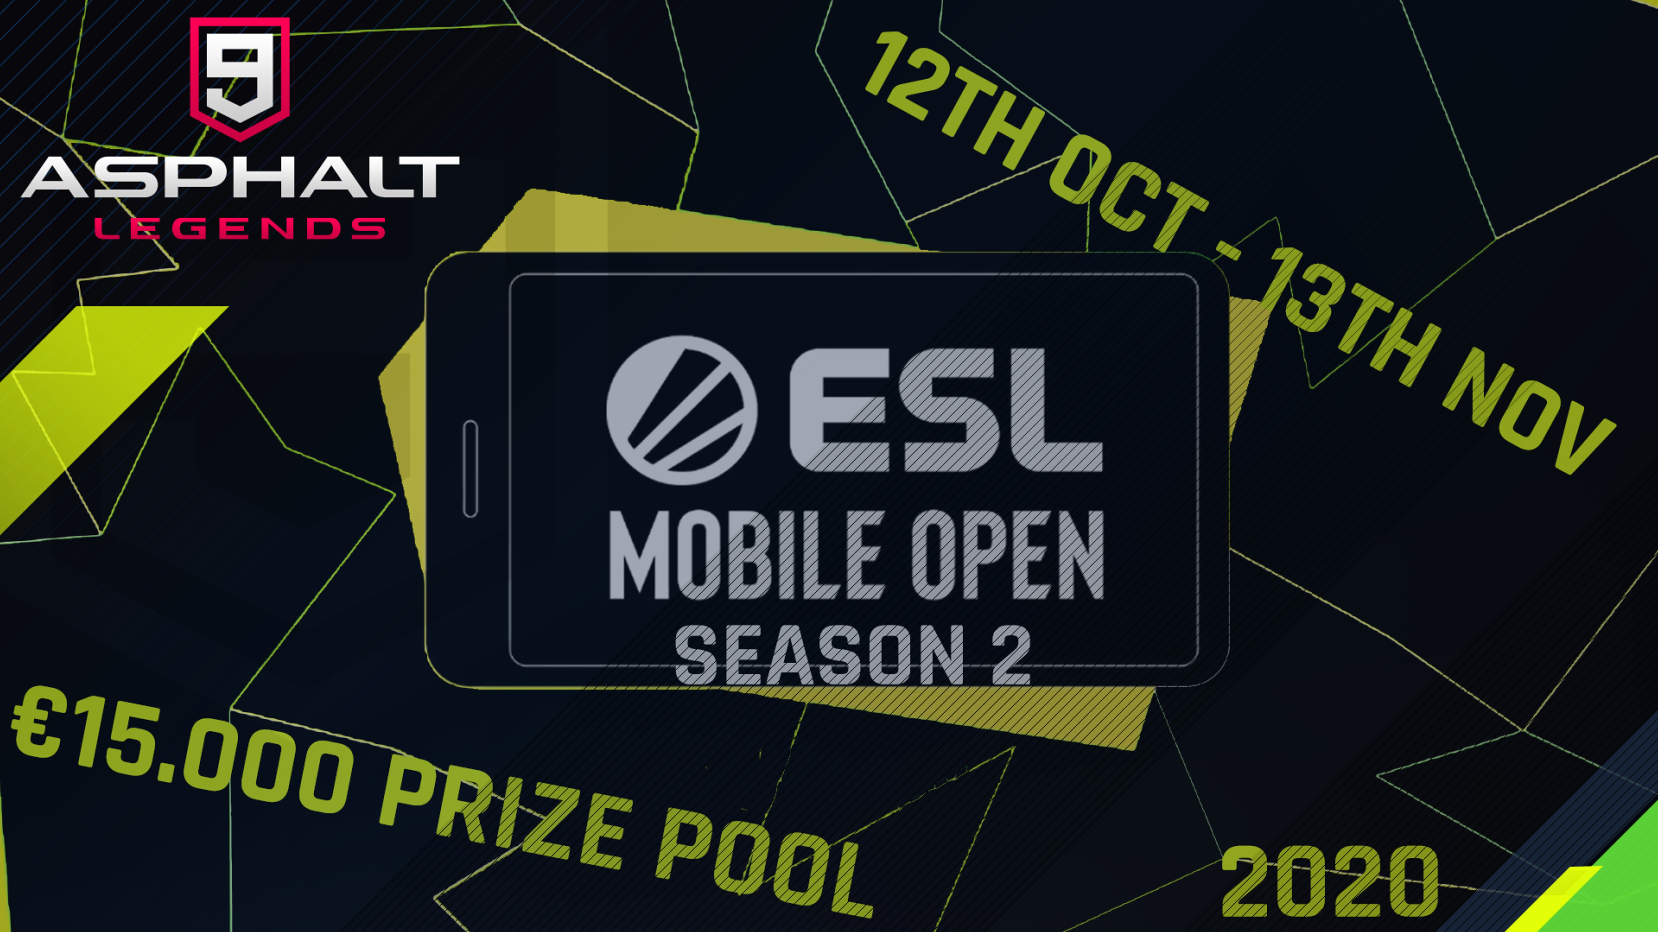 Asphalt 9 ESL Mobile Open Season 2